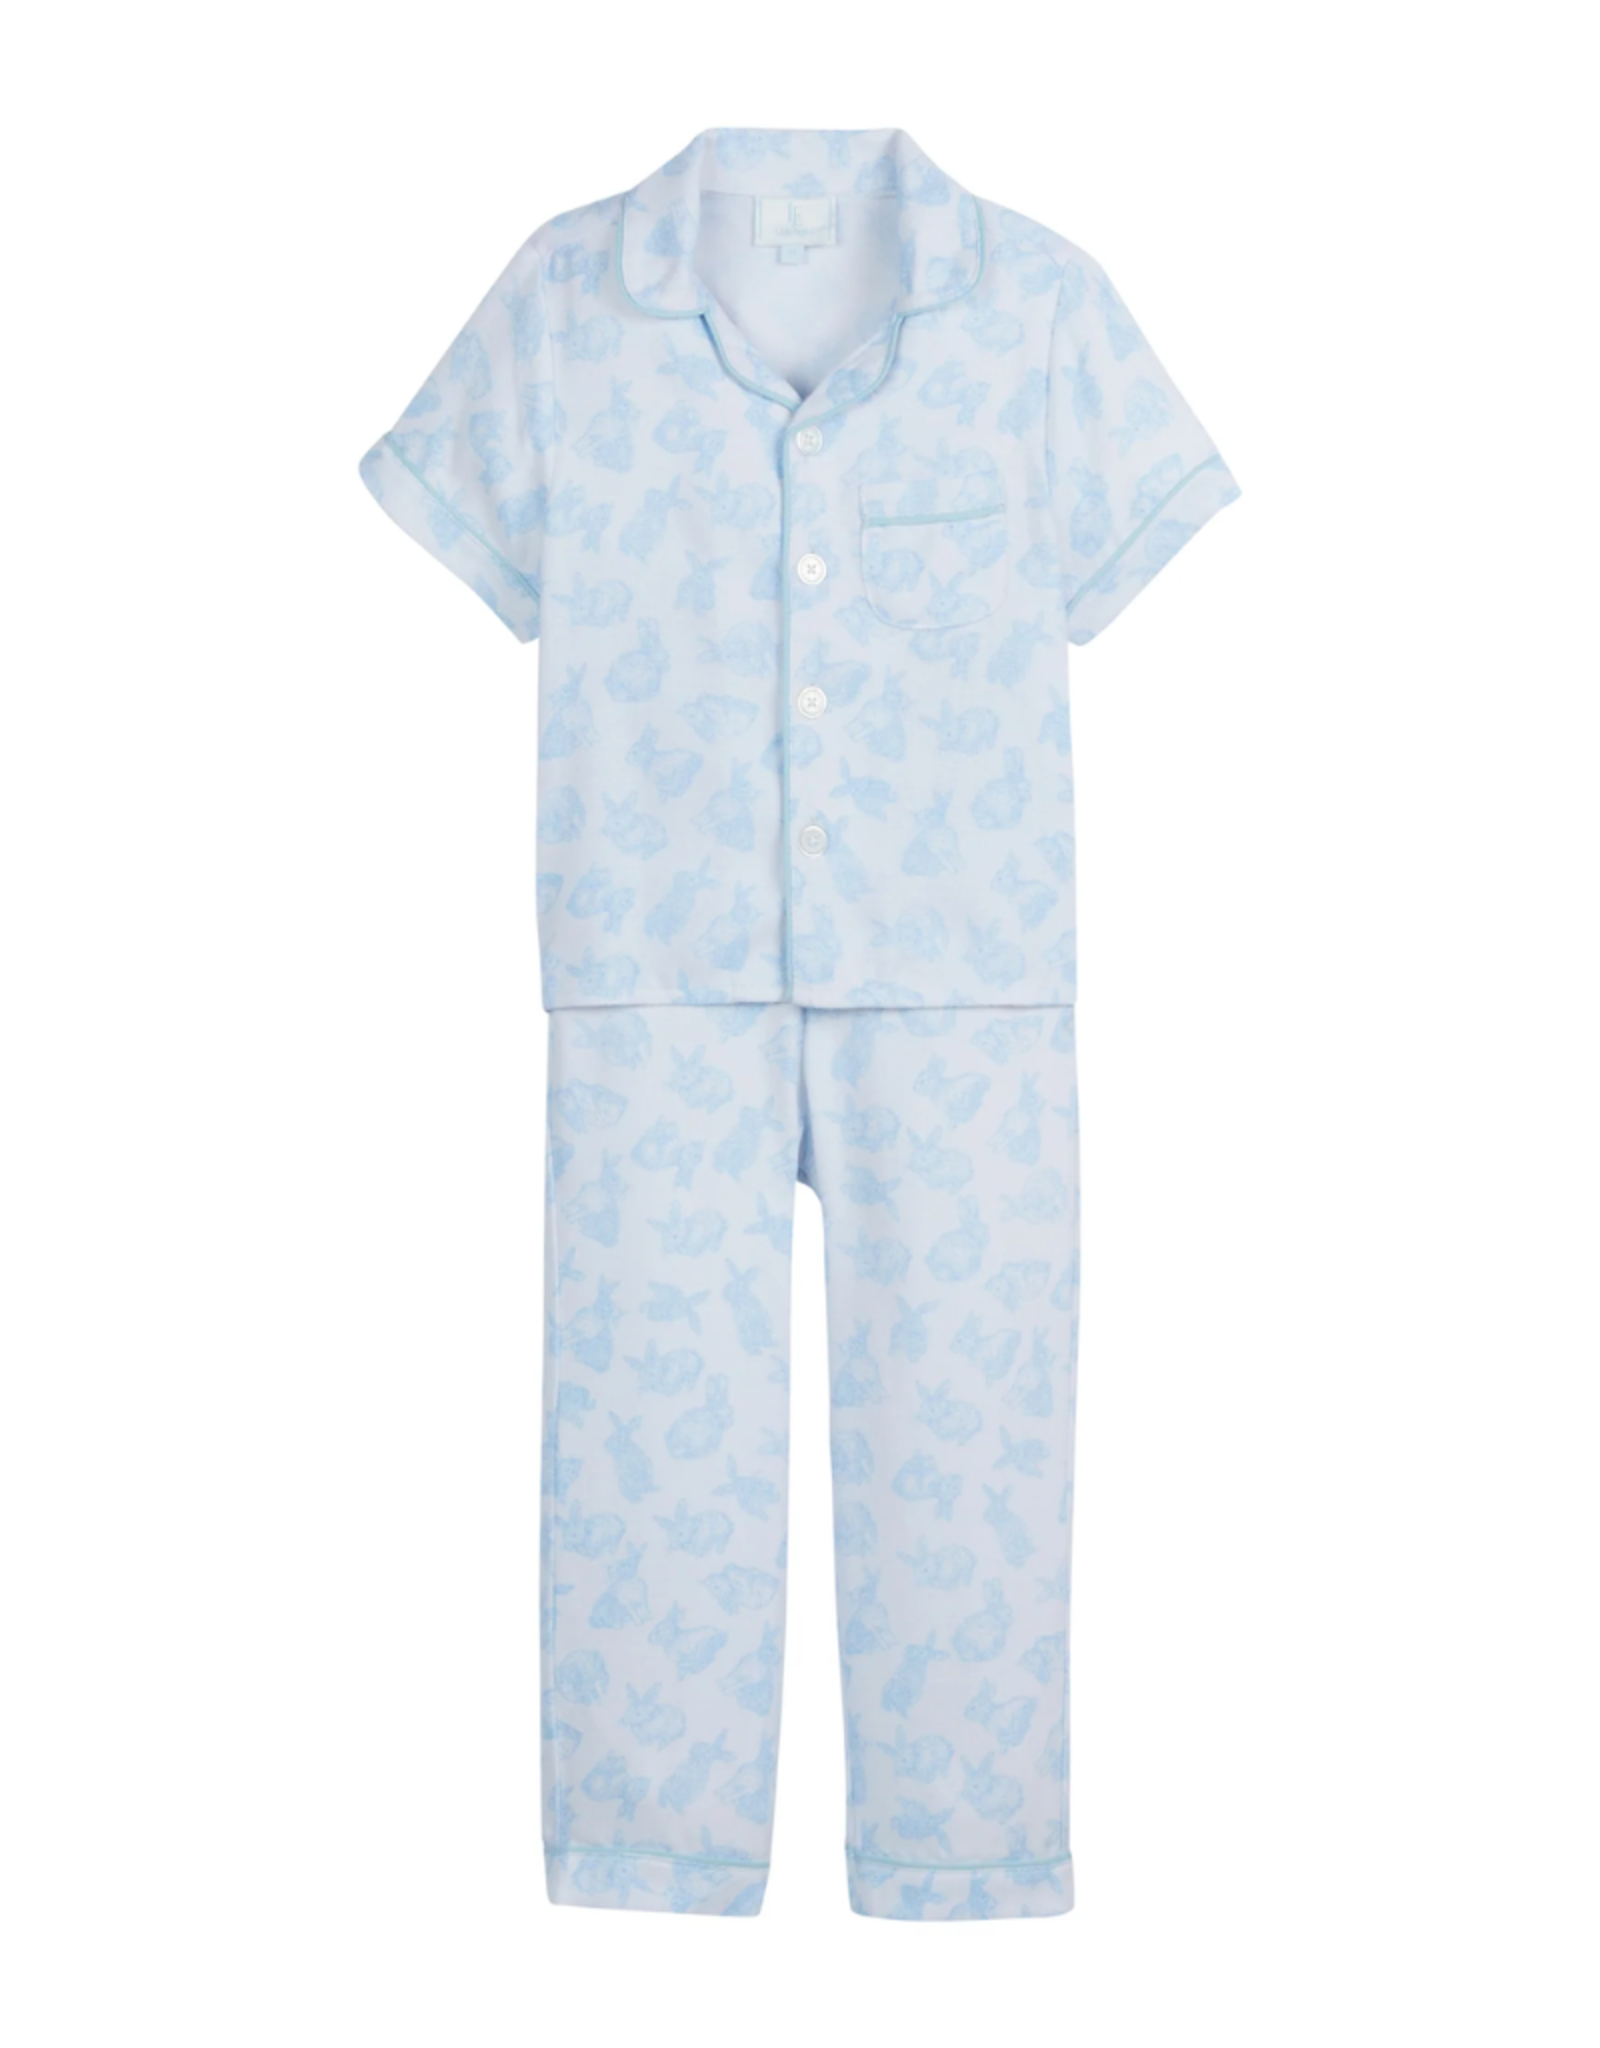 Little English Classic Short Sleeve Pajama Set, Bunnies